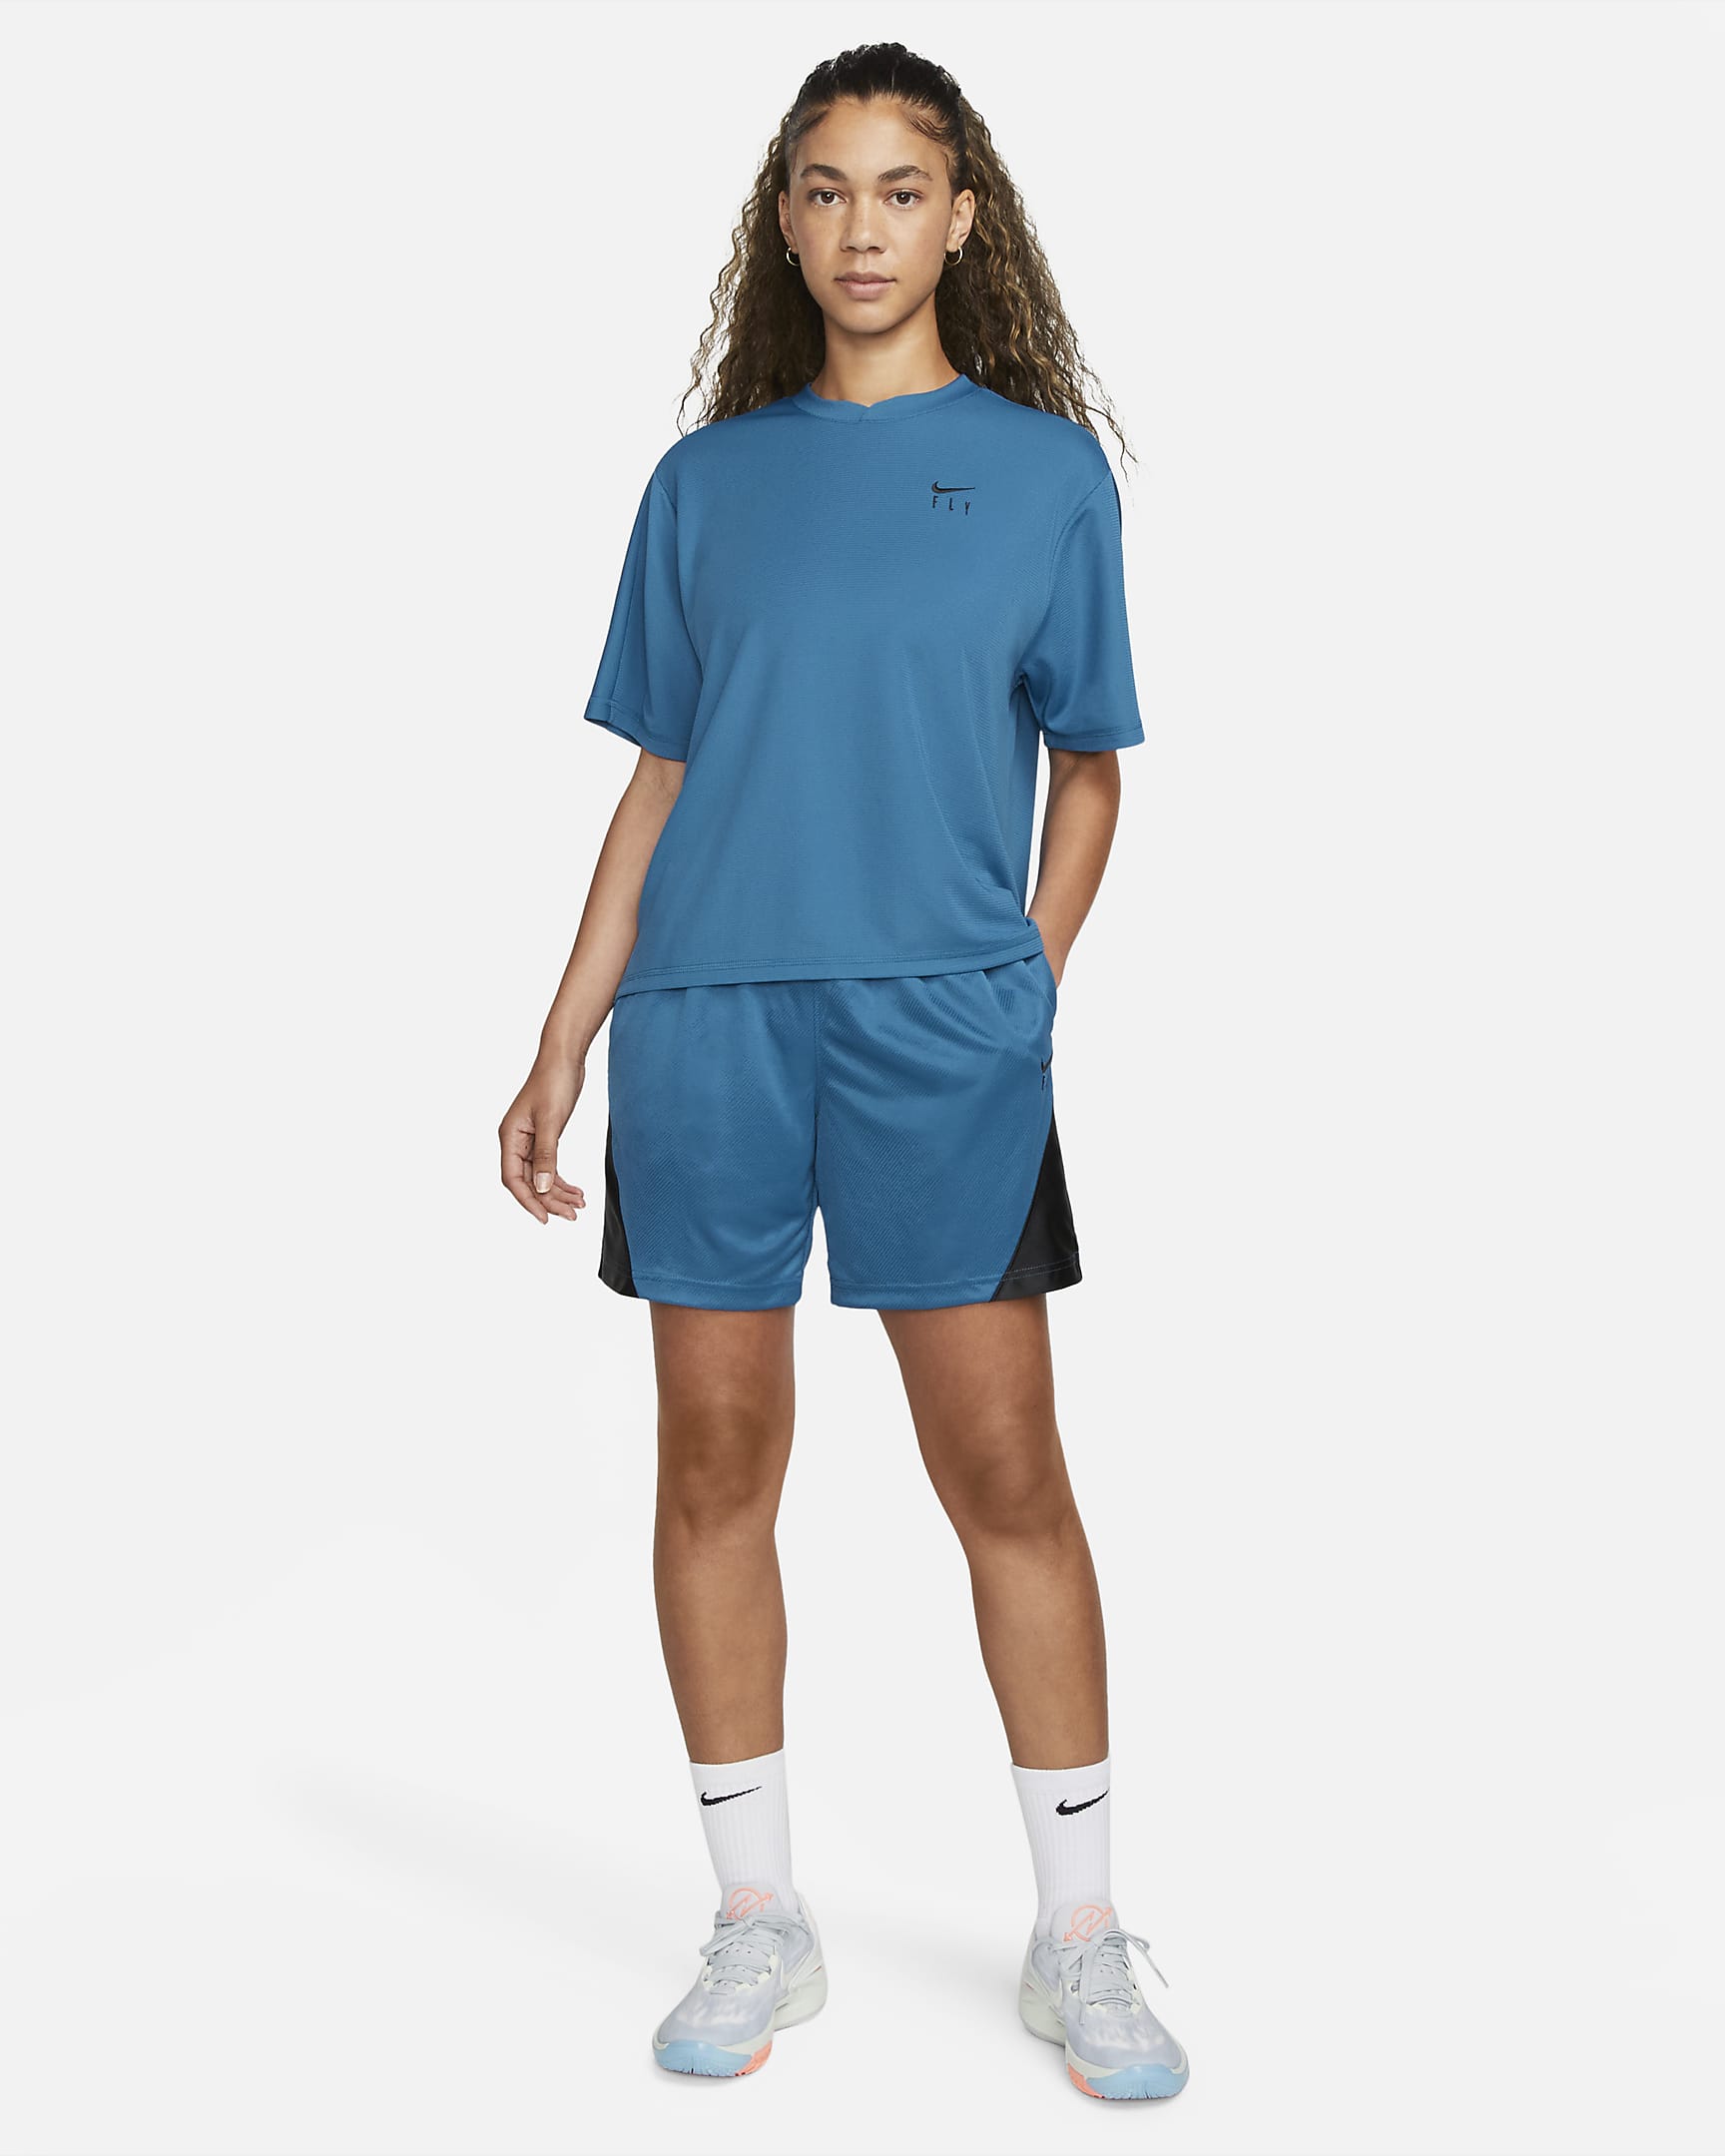 Nike Dri-FIT Women's Short-Sleeve Basketball Top. Nike ID